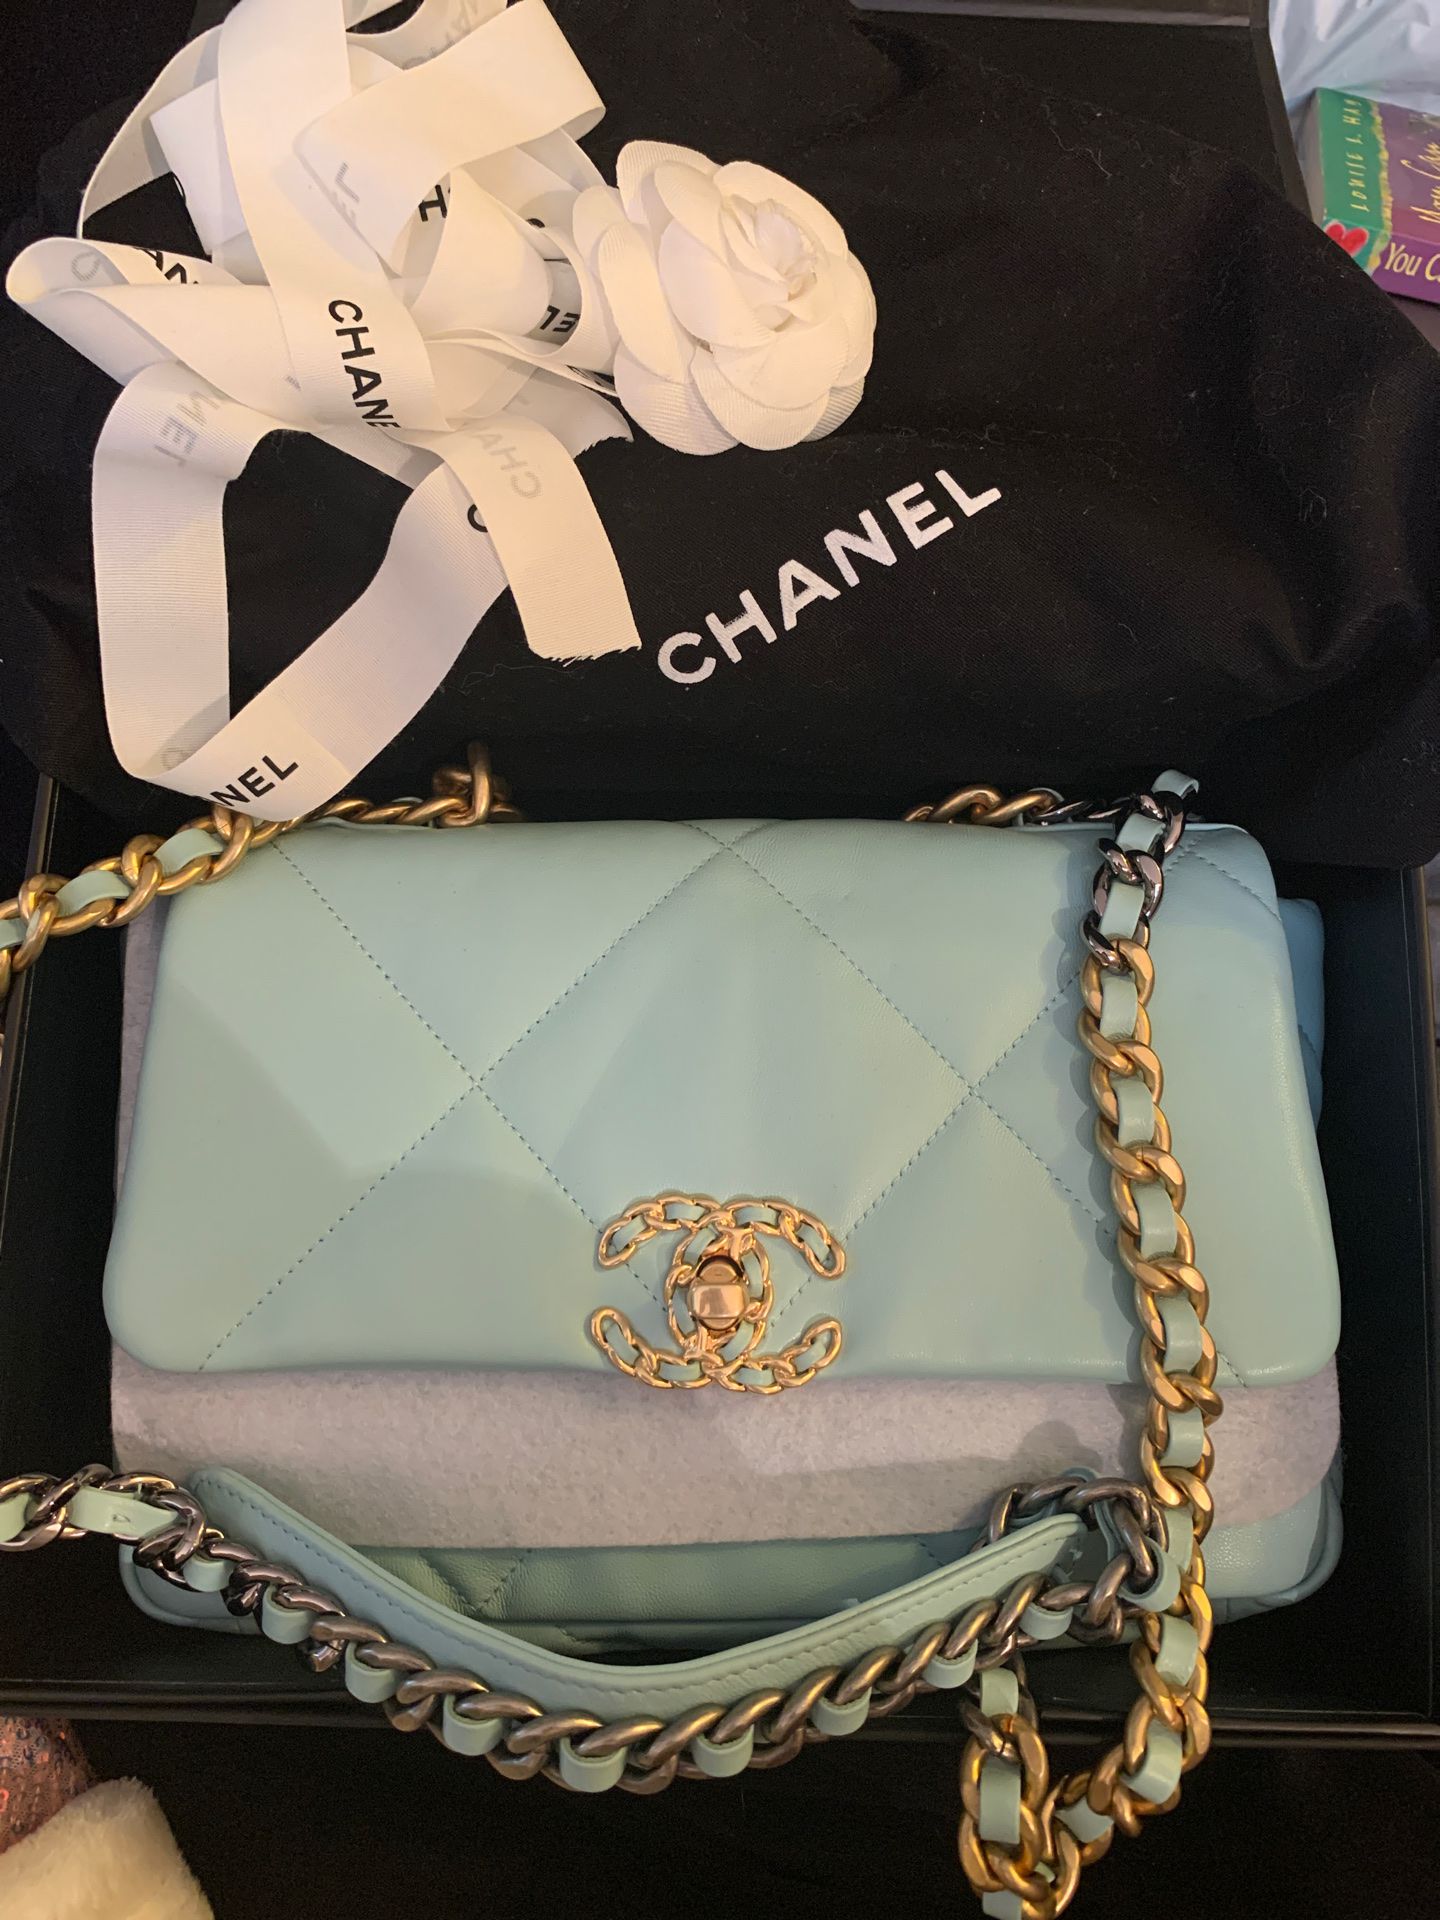 Original Chanel 19 handbag 2019 mint